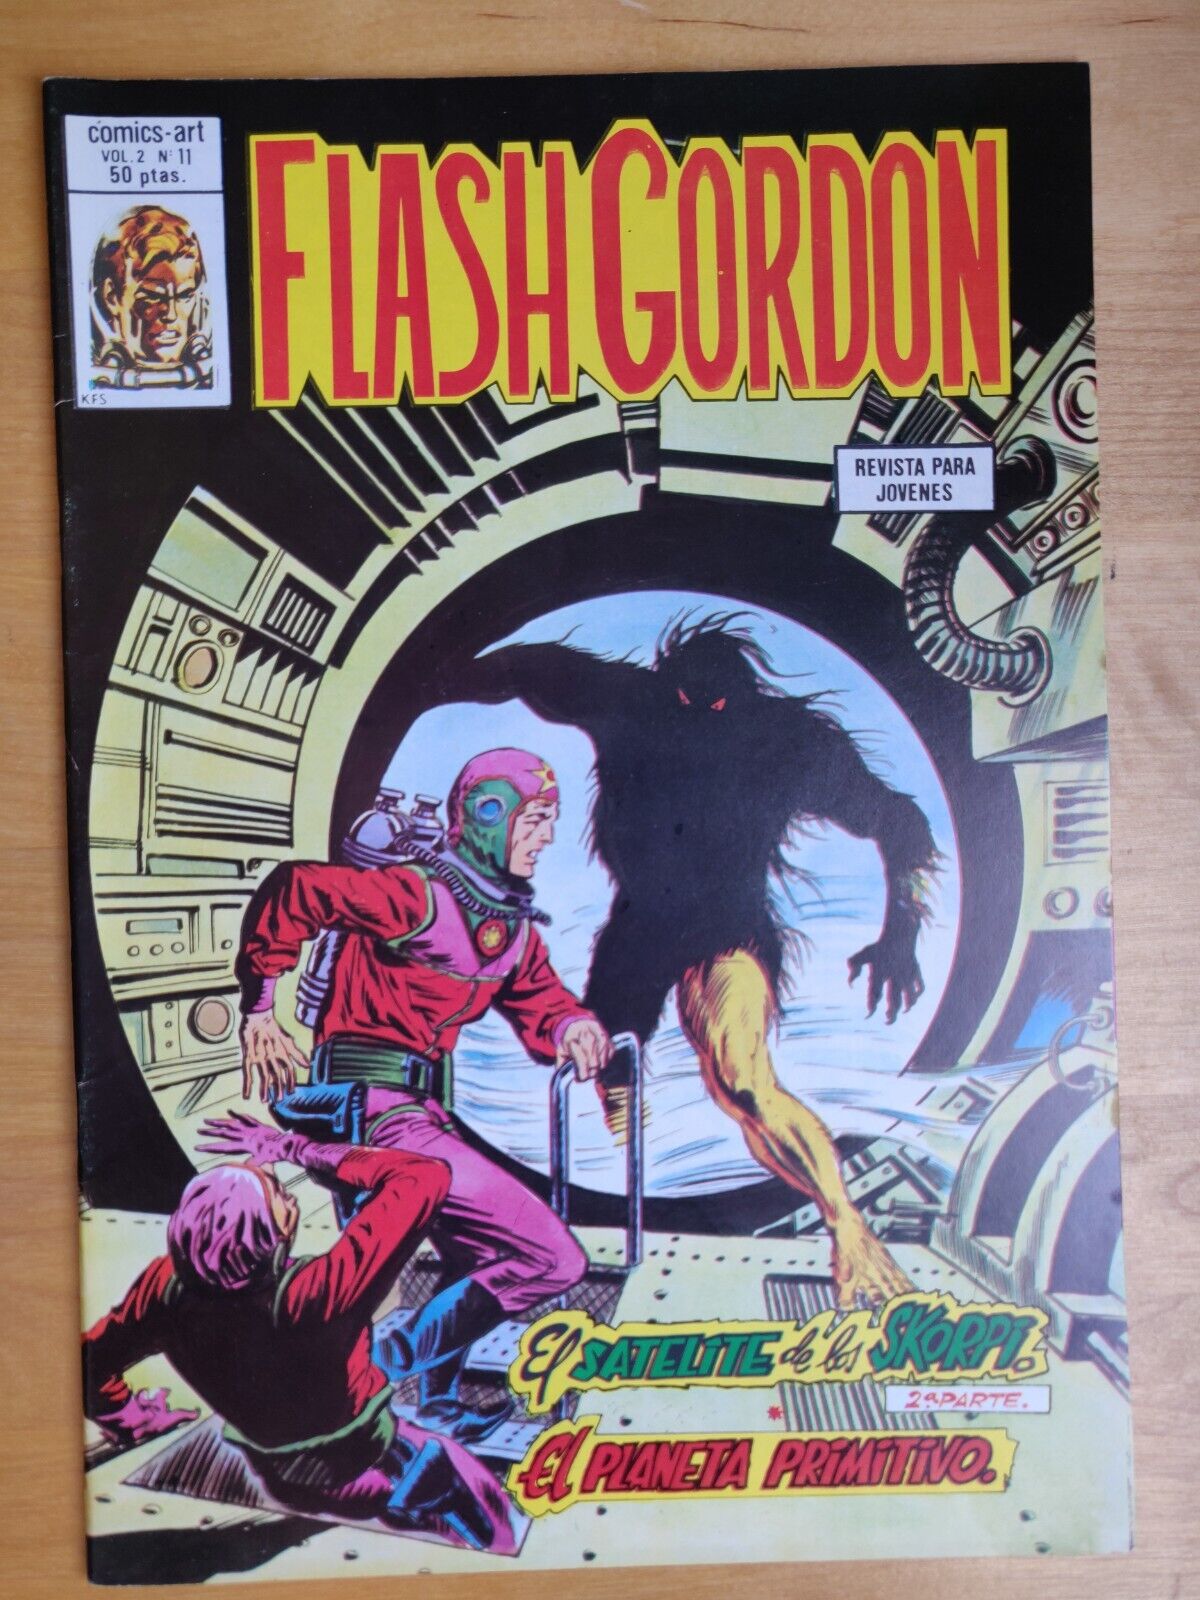 Famous Funnies #213 - Spanish Edition Frank Frazetta Cover Swipe - Flash Gordon